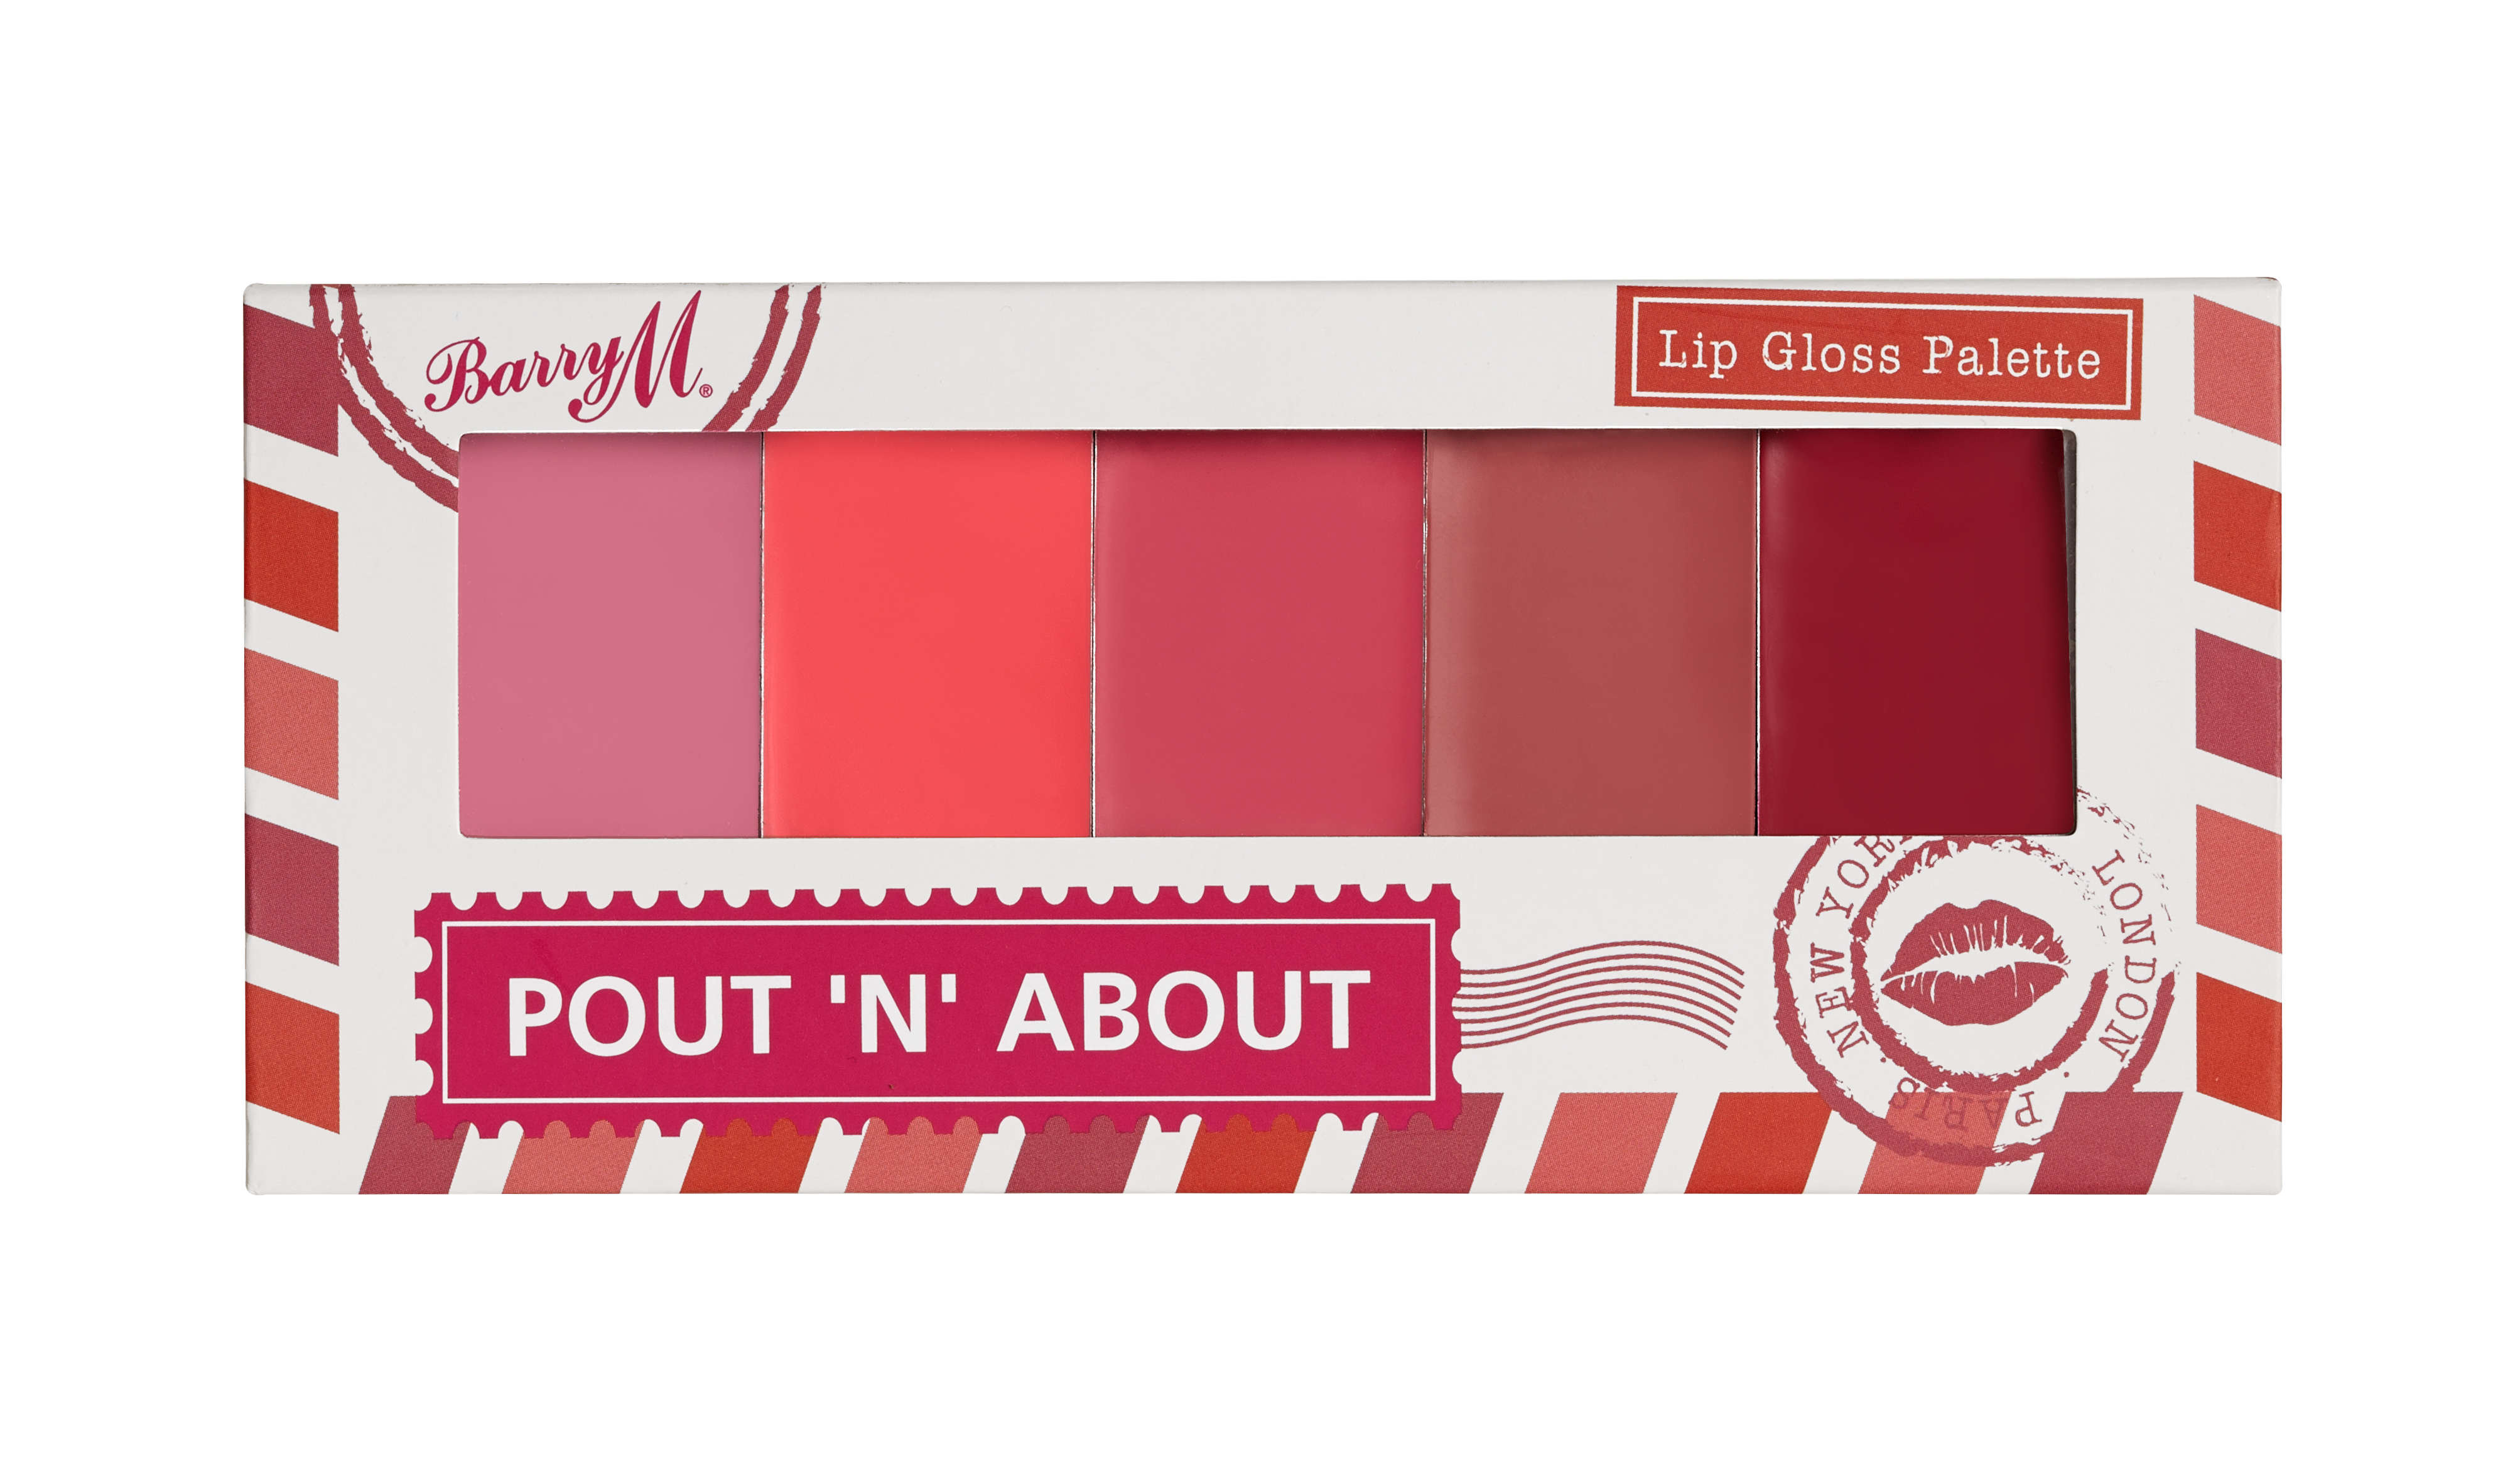 Barry M Pout 'n About Lip Gloss Palette